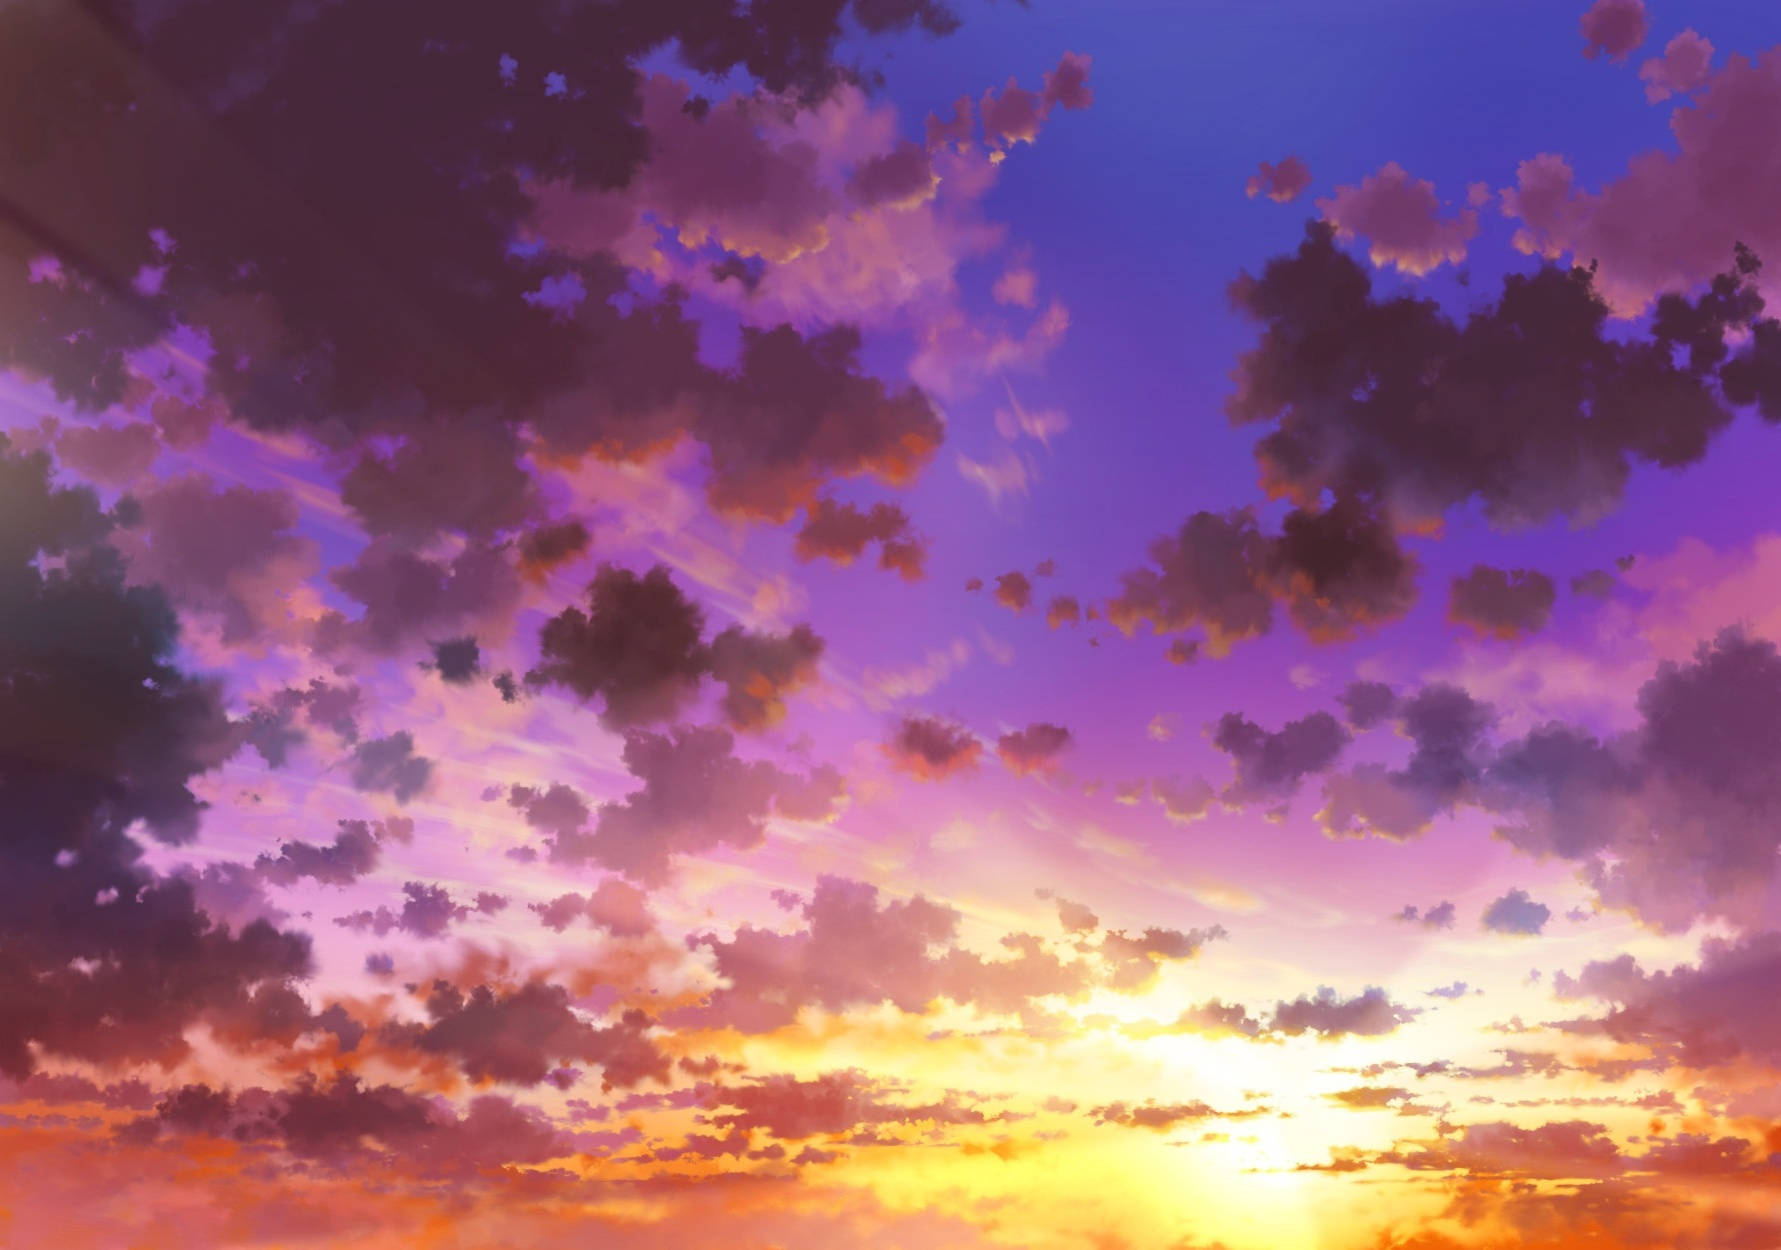 Sunset Sky Digital Art Wallpaper